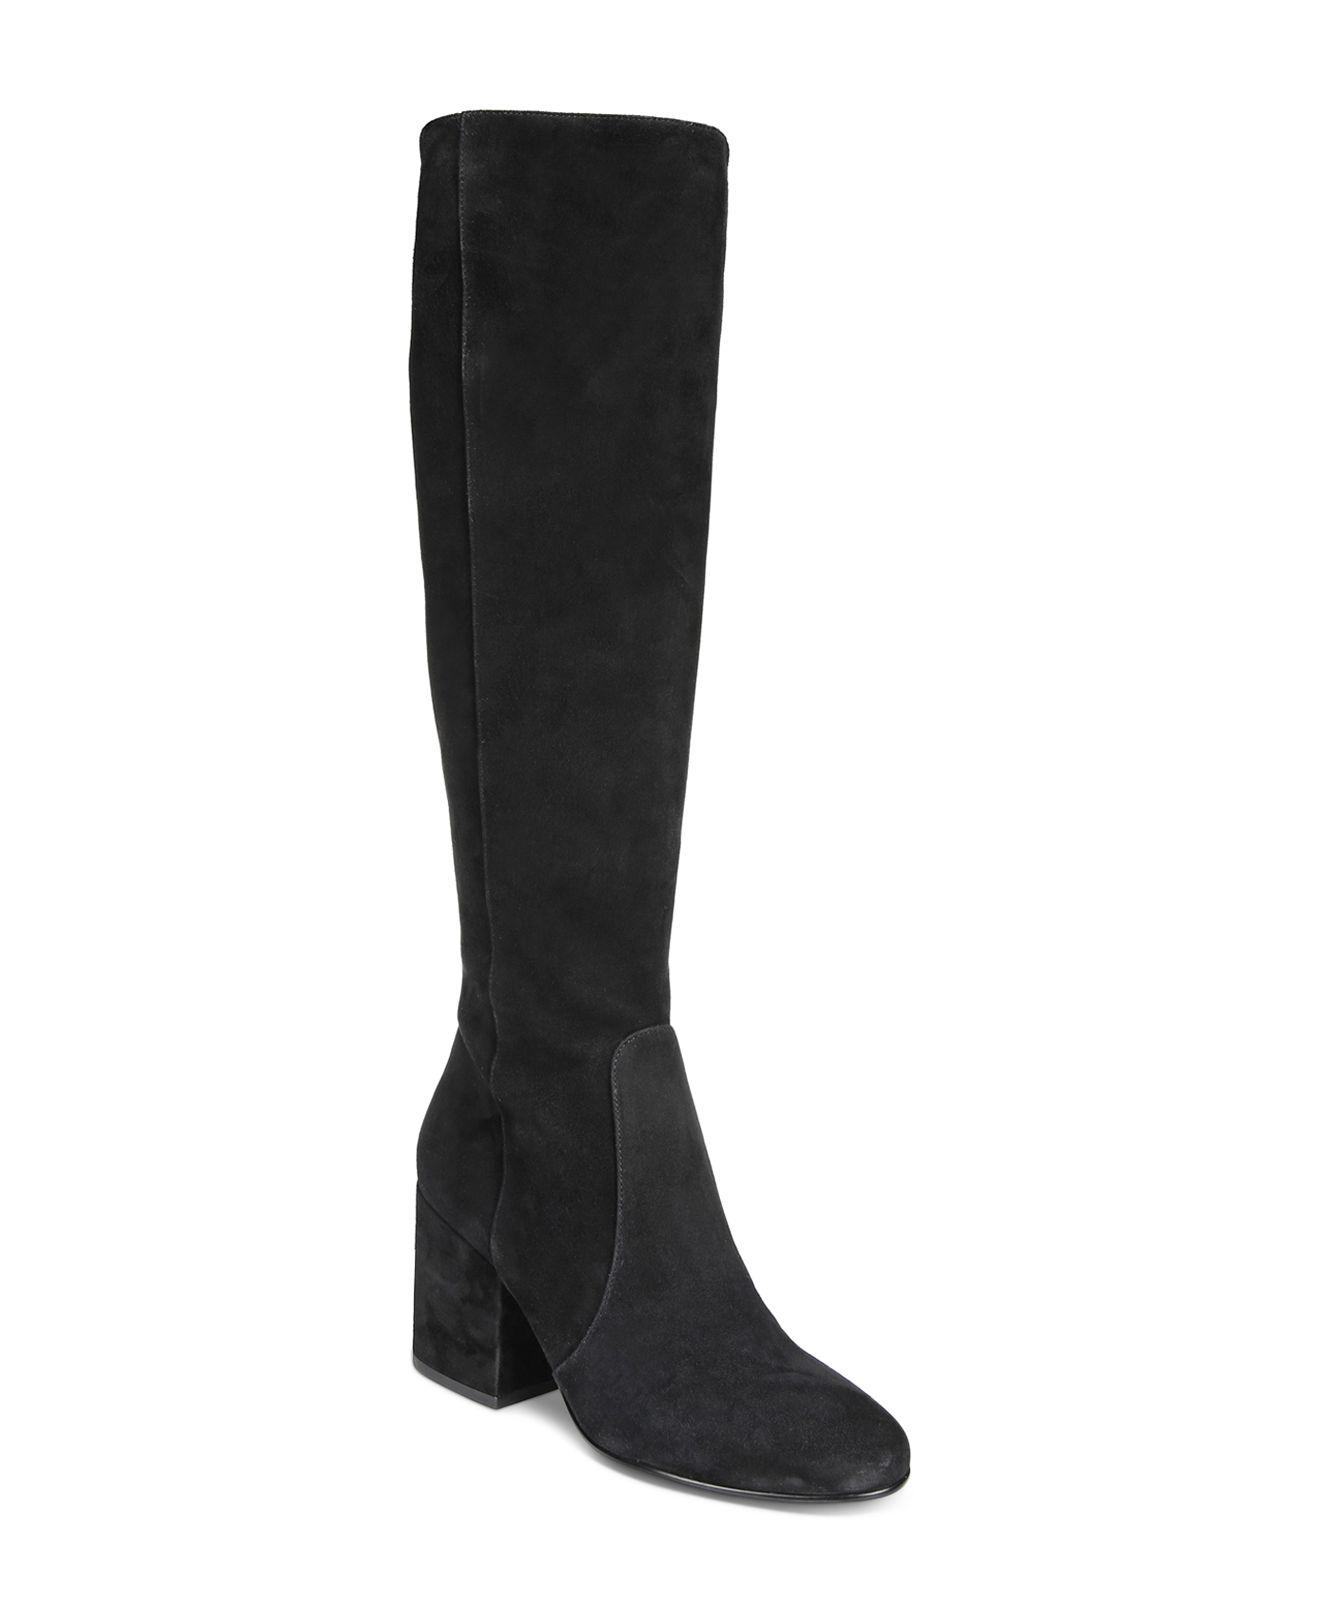 Sam Edelman Women's Thora Suede Tall Block Heel Boots in Black - Lyst